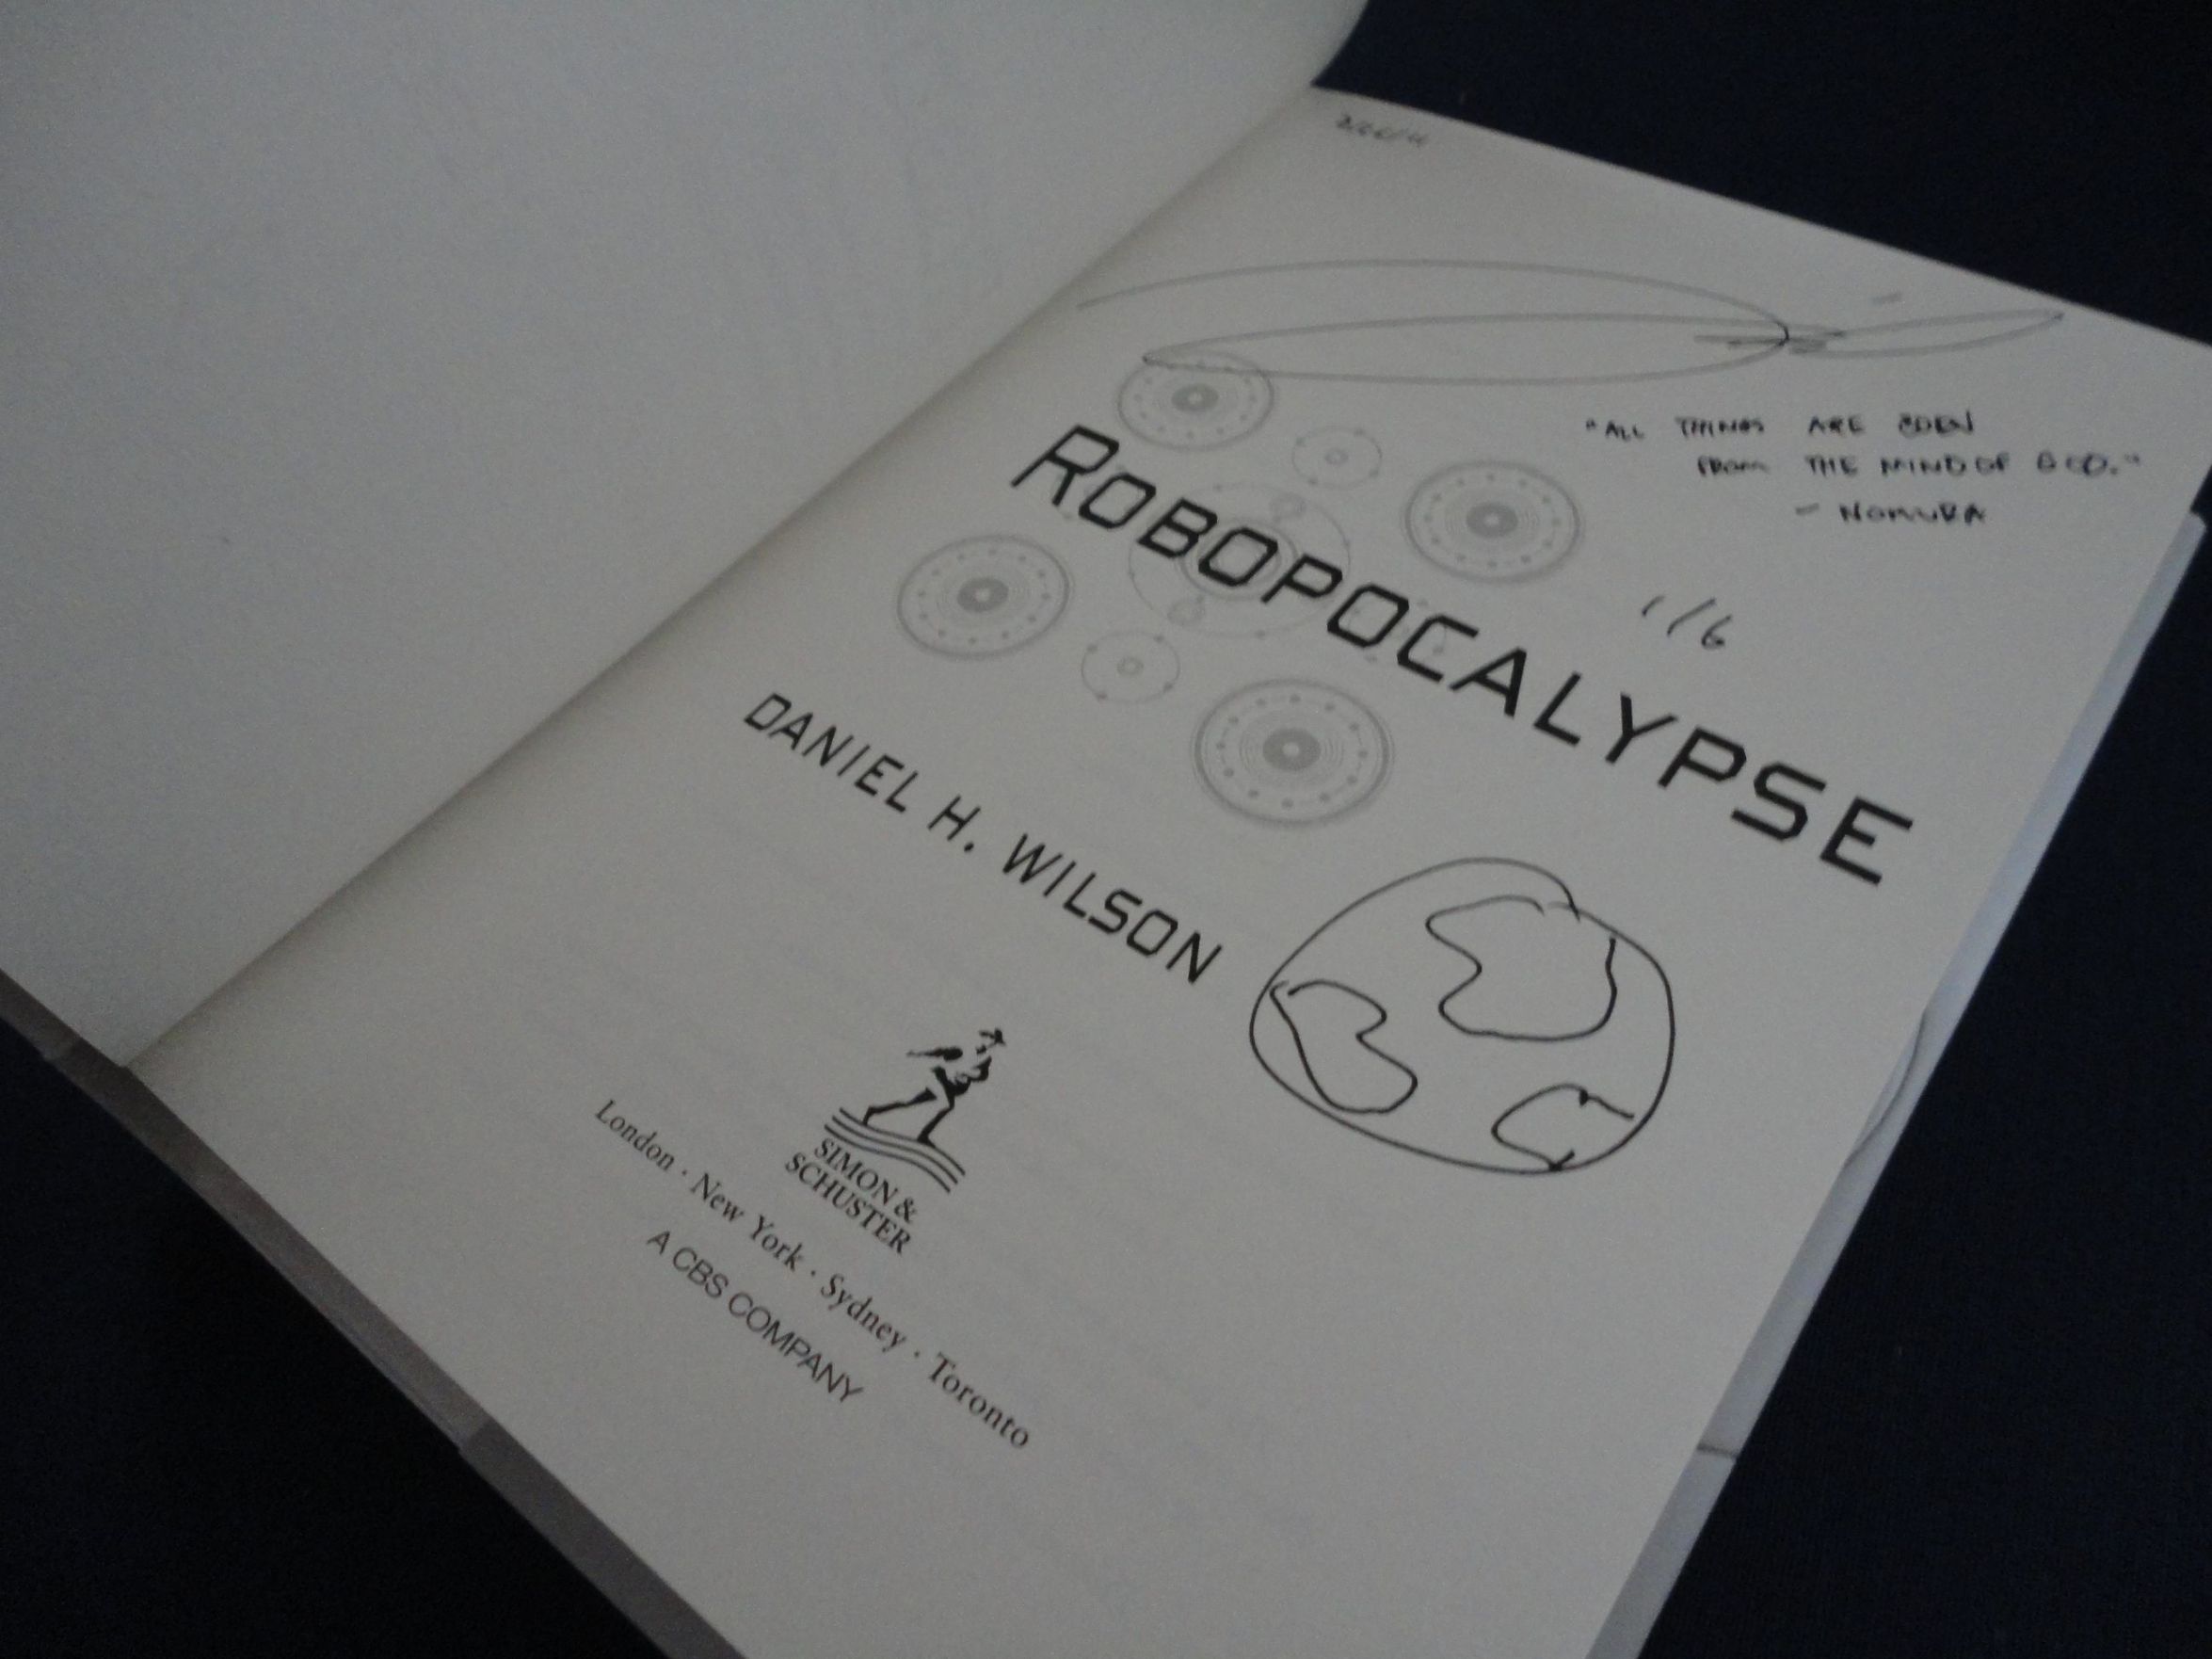 Amazing Robopocalypse Pictures & Backgrounds